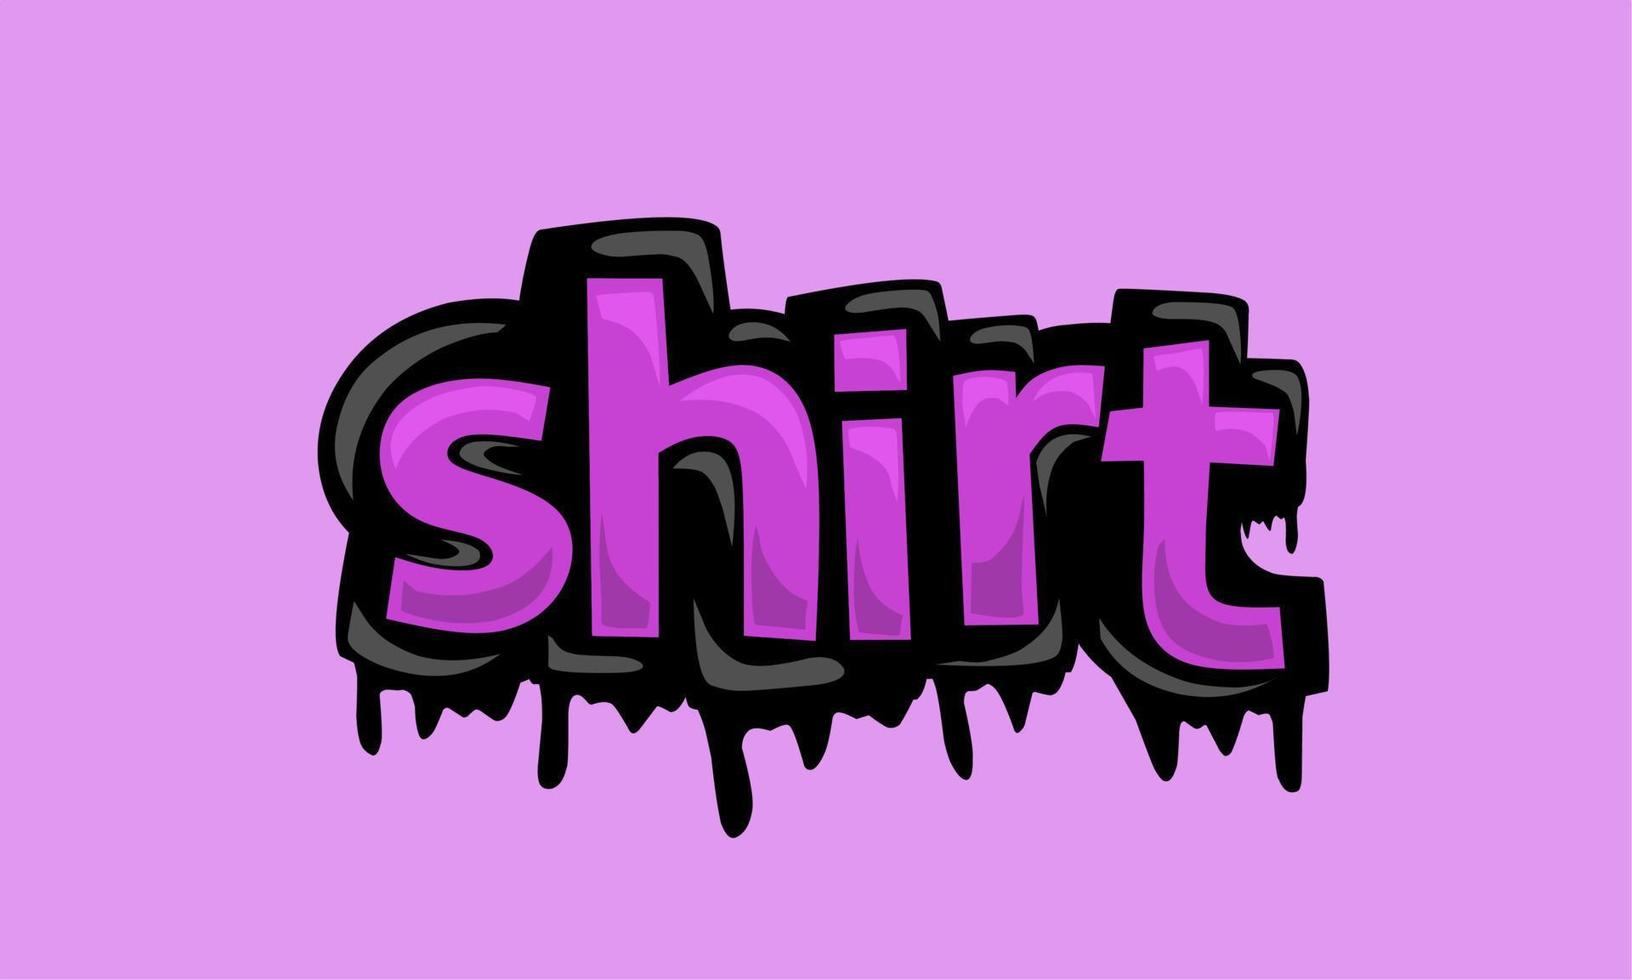 diseño de vector de escritura de camisa sobre fondo rosa